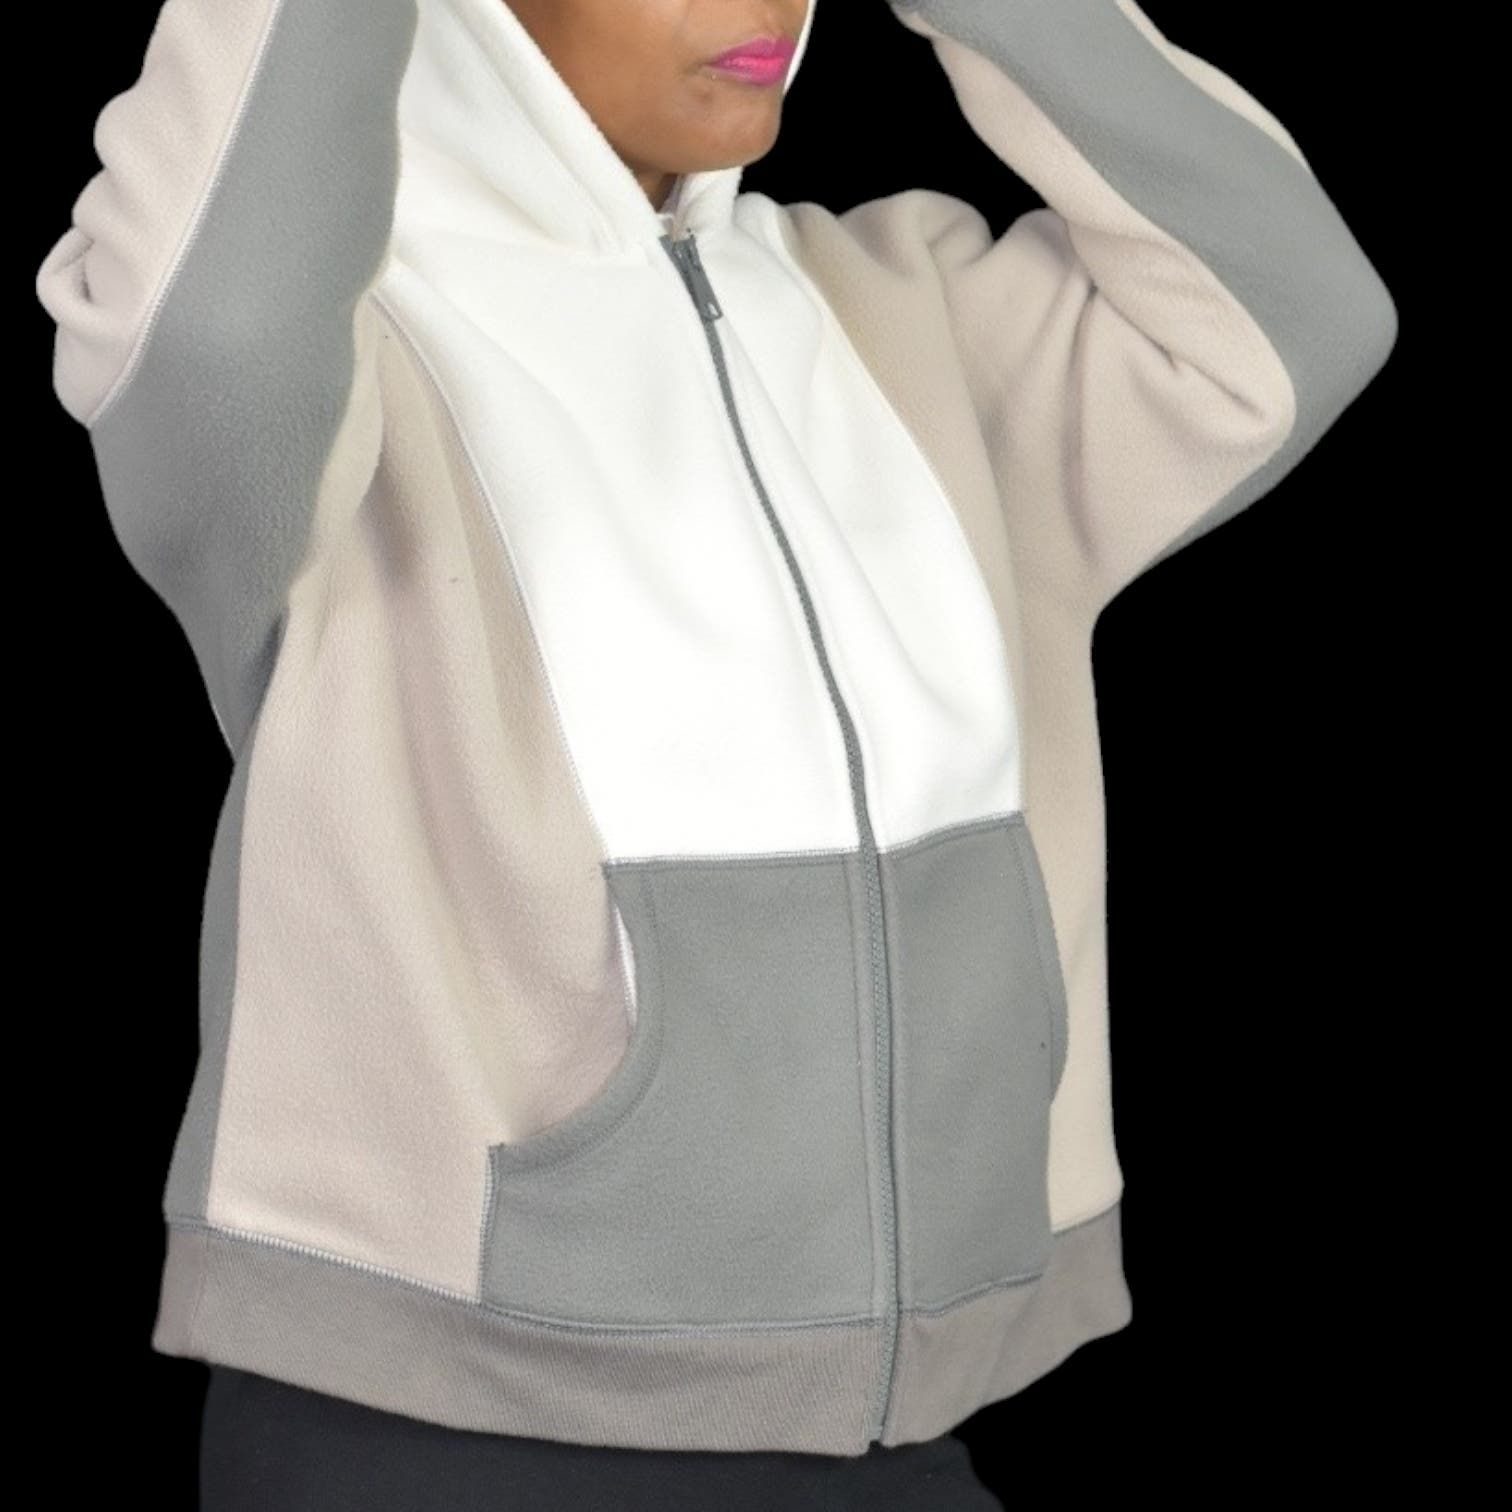 Madewell MWL Betterfleece Hoodie Tan Colorblock Zip Sweatshirt Fleece Size Medium